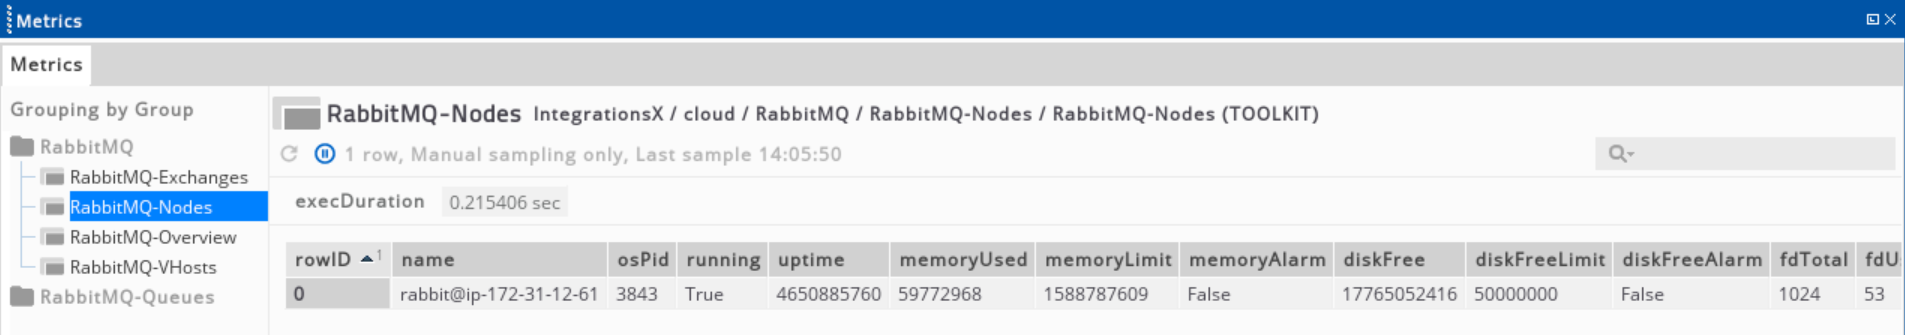 RabbitMQ-Nodes